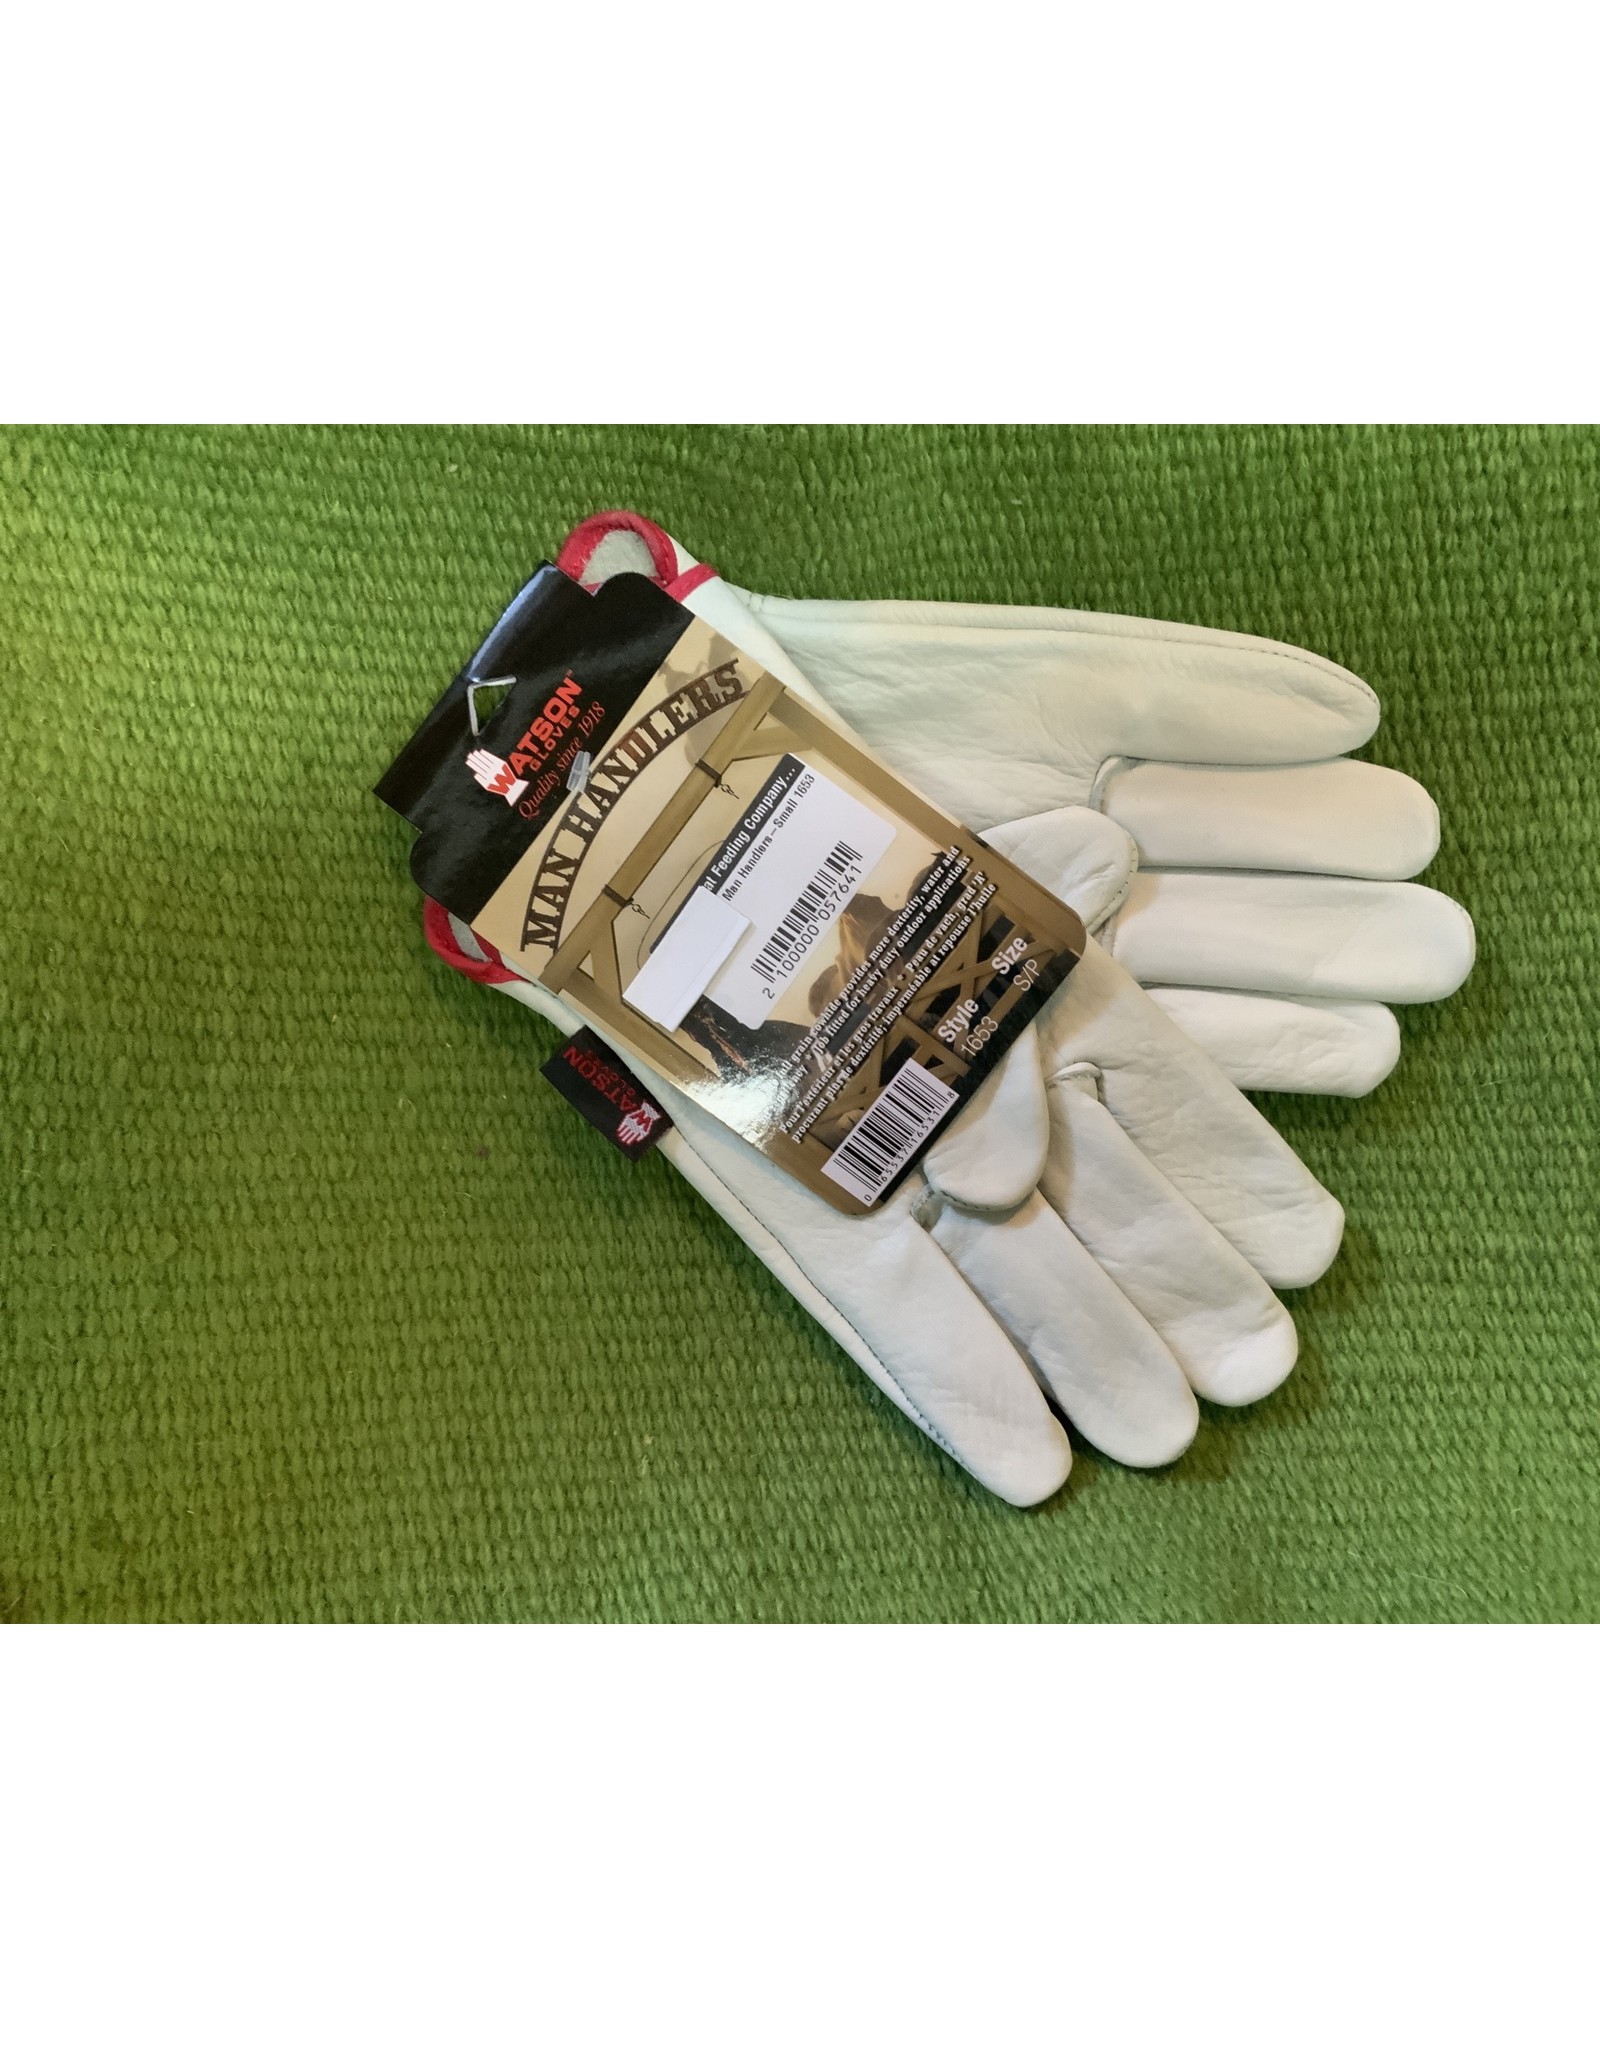 Gloves*Man Handlers-S 1653